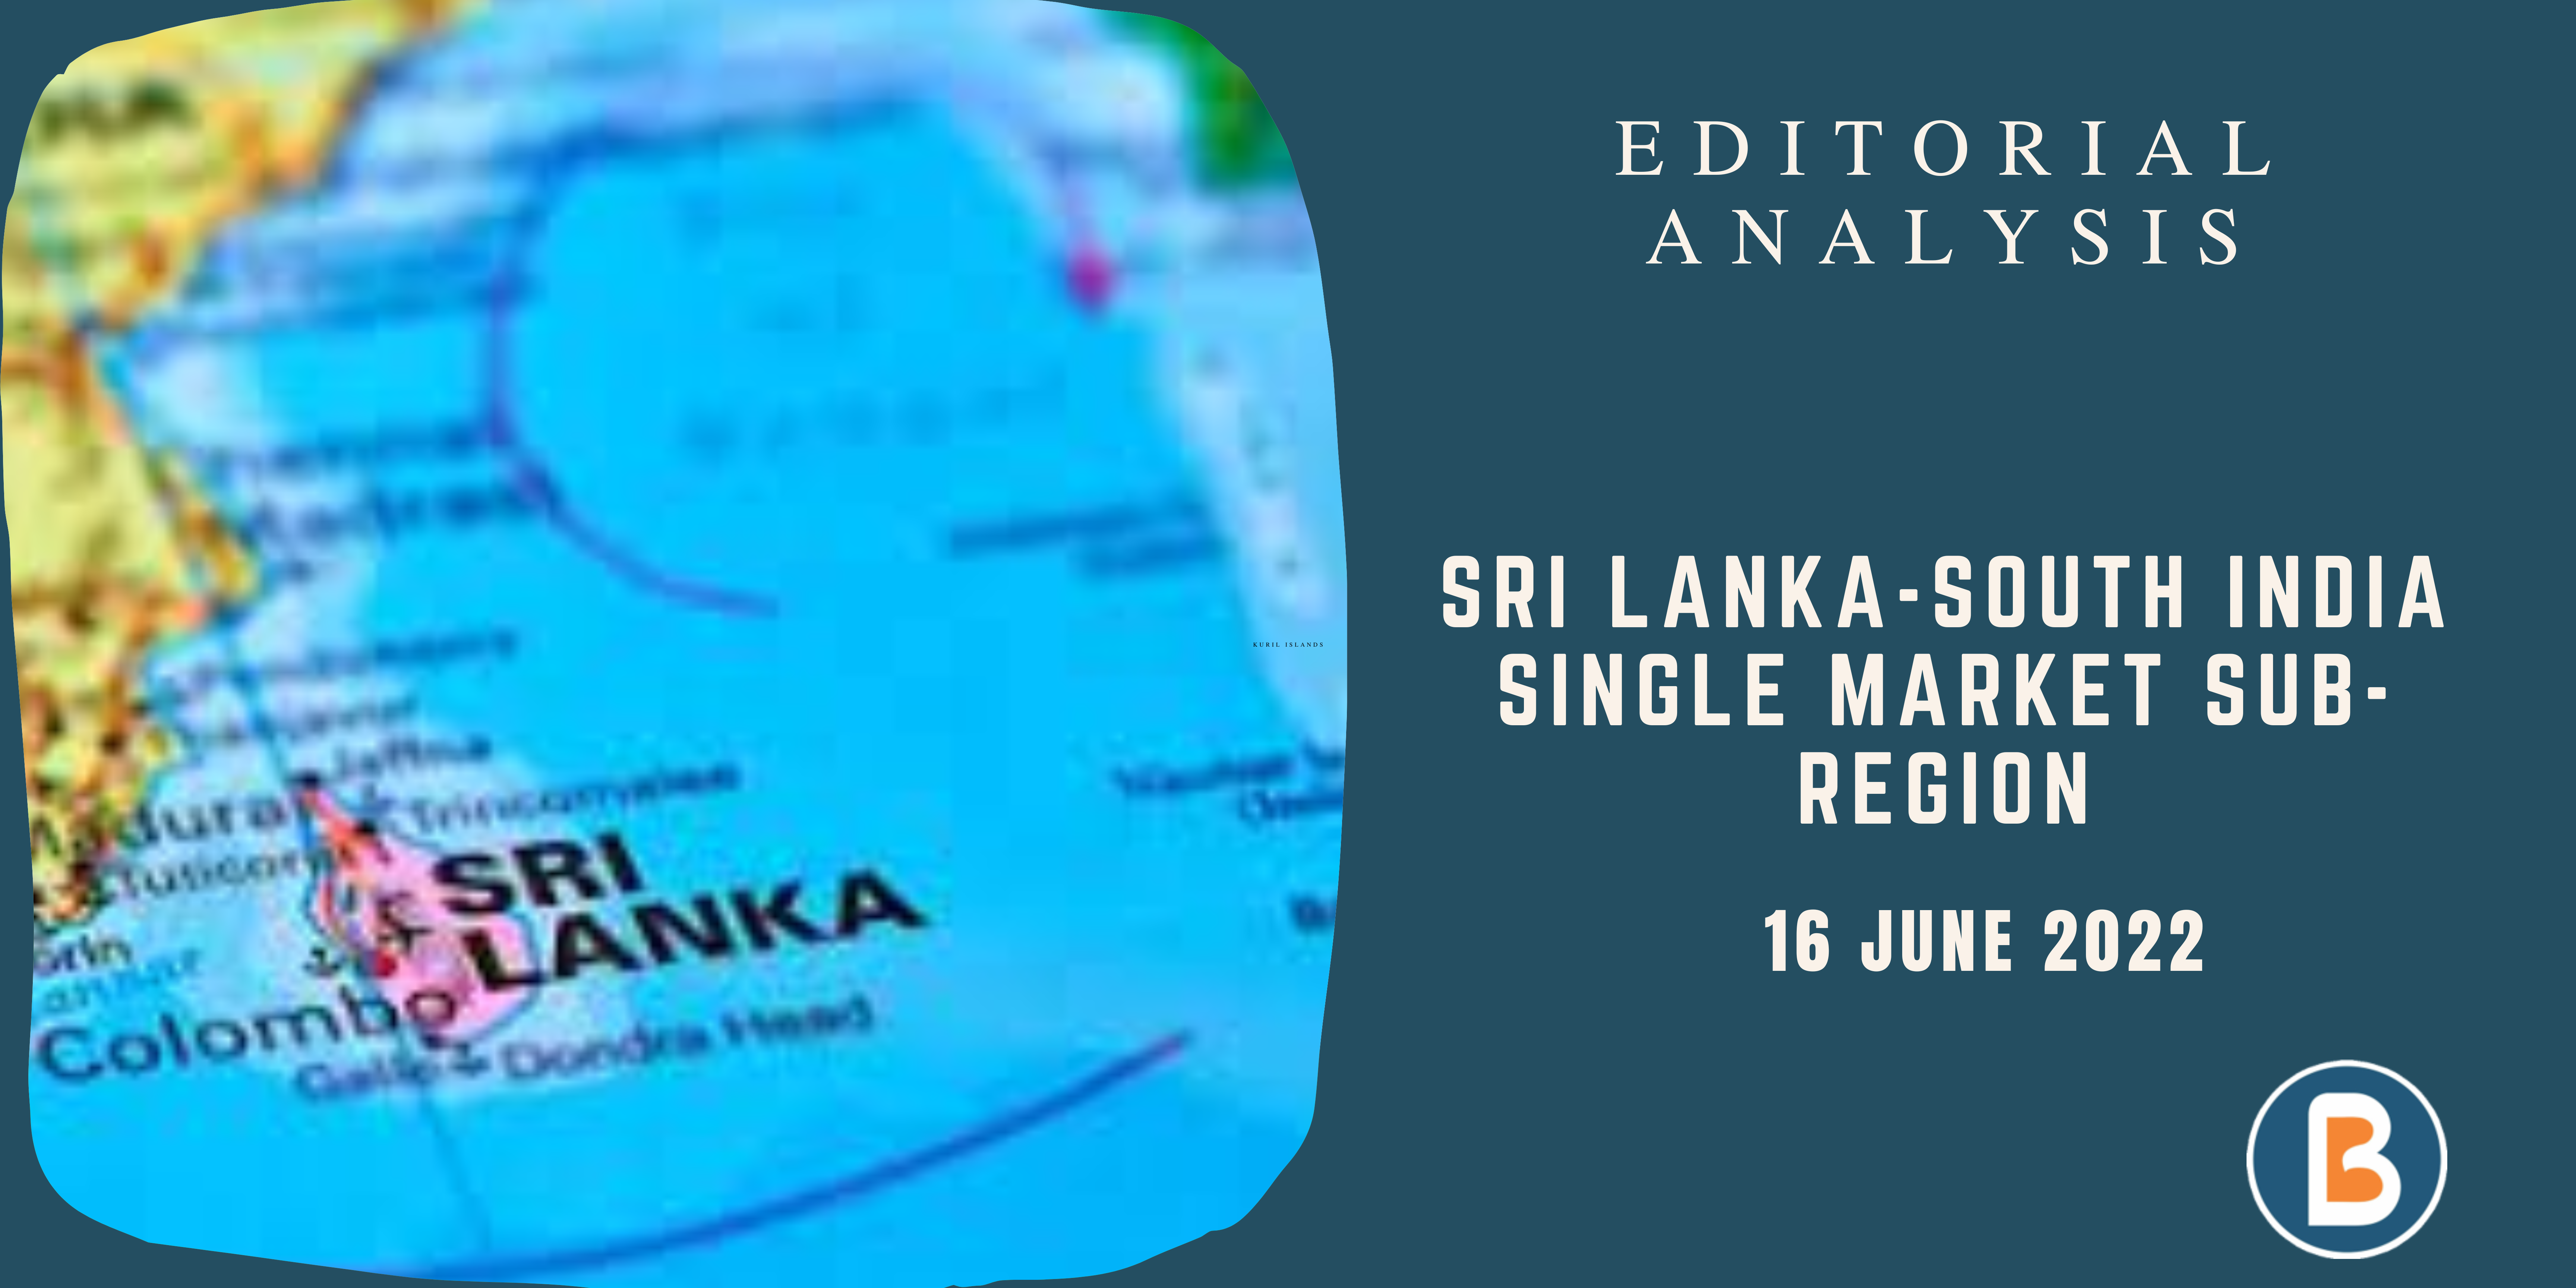 Editorial Analysis for Civil Services - Sri Lanka-South India Single Market Sub-Region